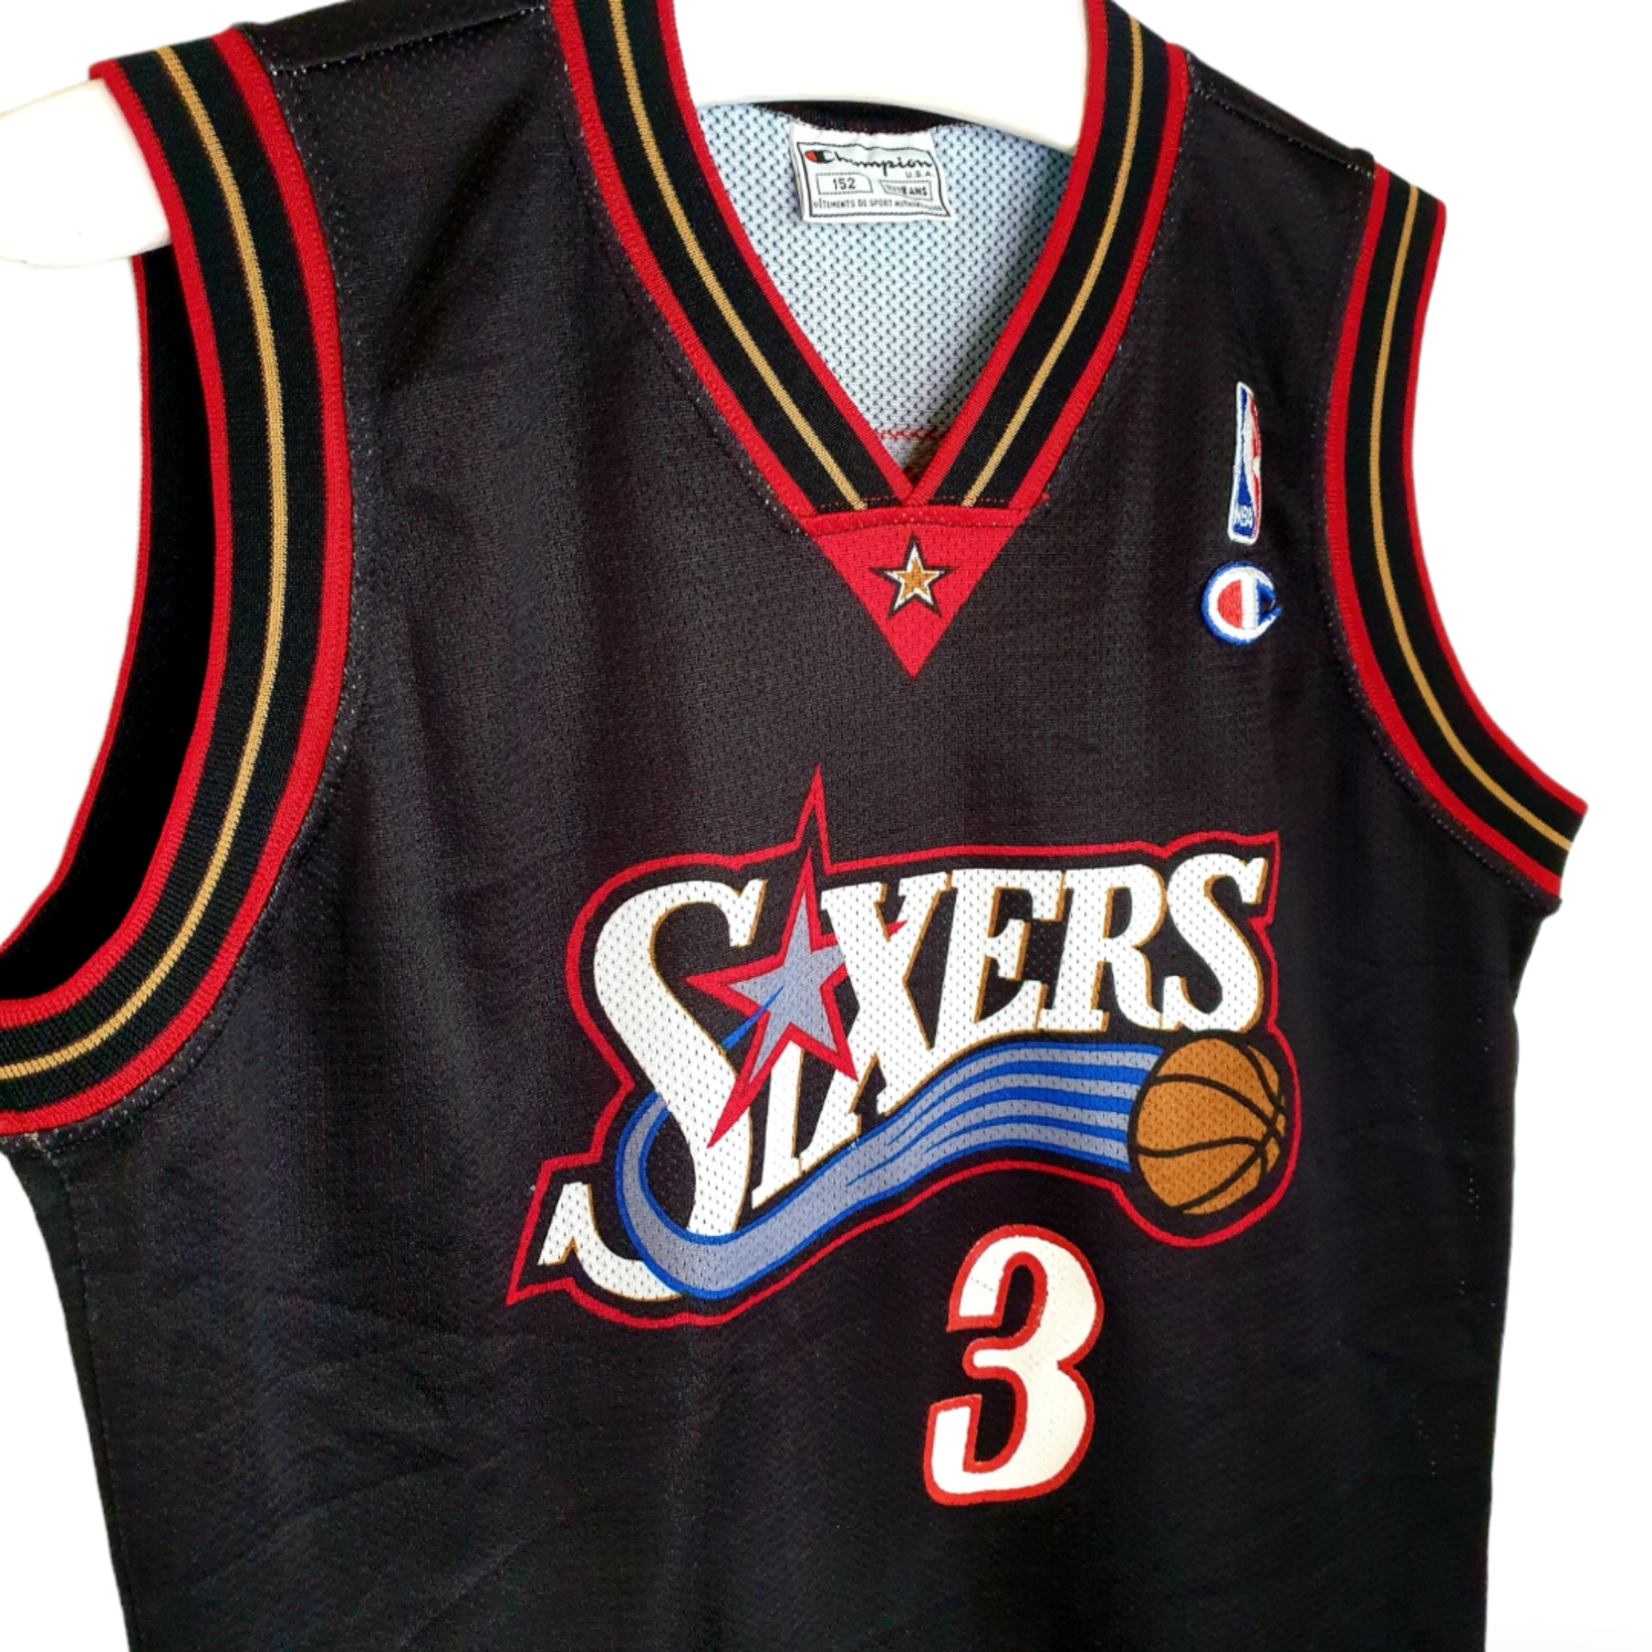 Champion Origineel Champion NBA basketbal shirt Philadelphia 76ers 2005/06